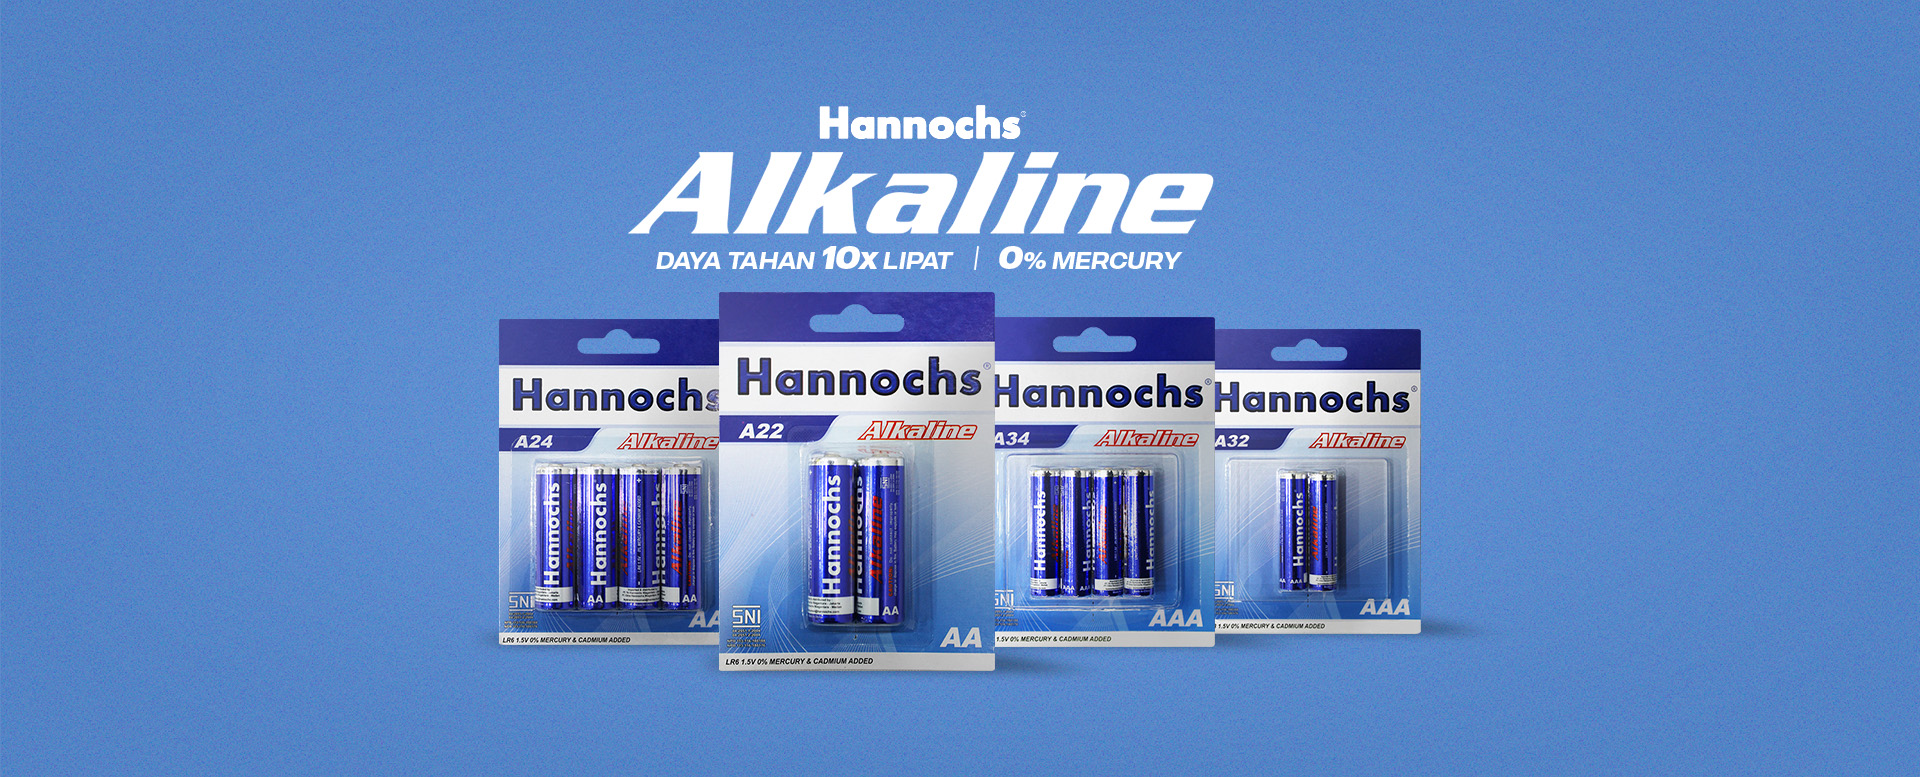 Hannochs Baterai Alkaline